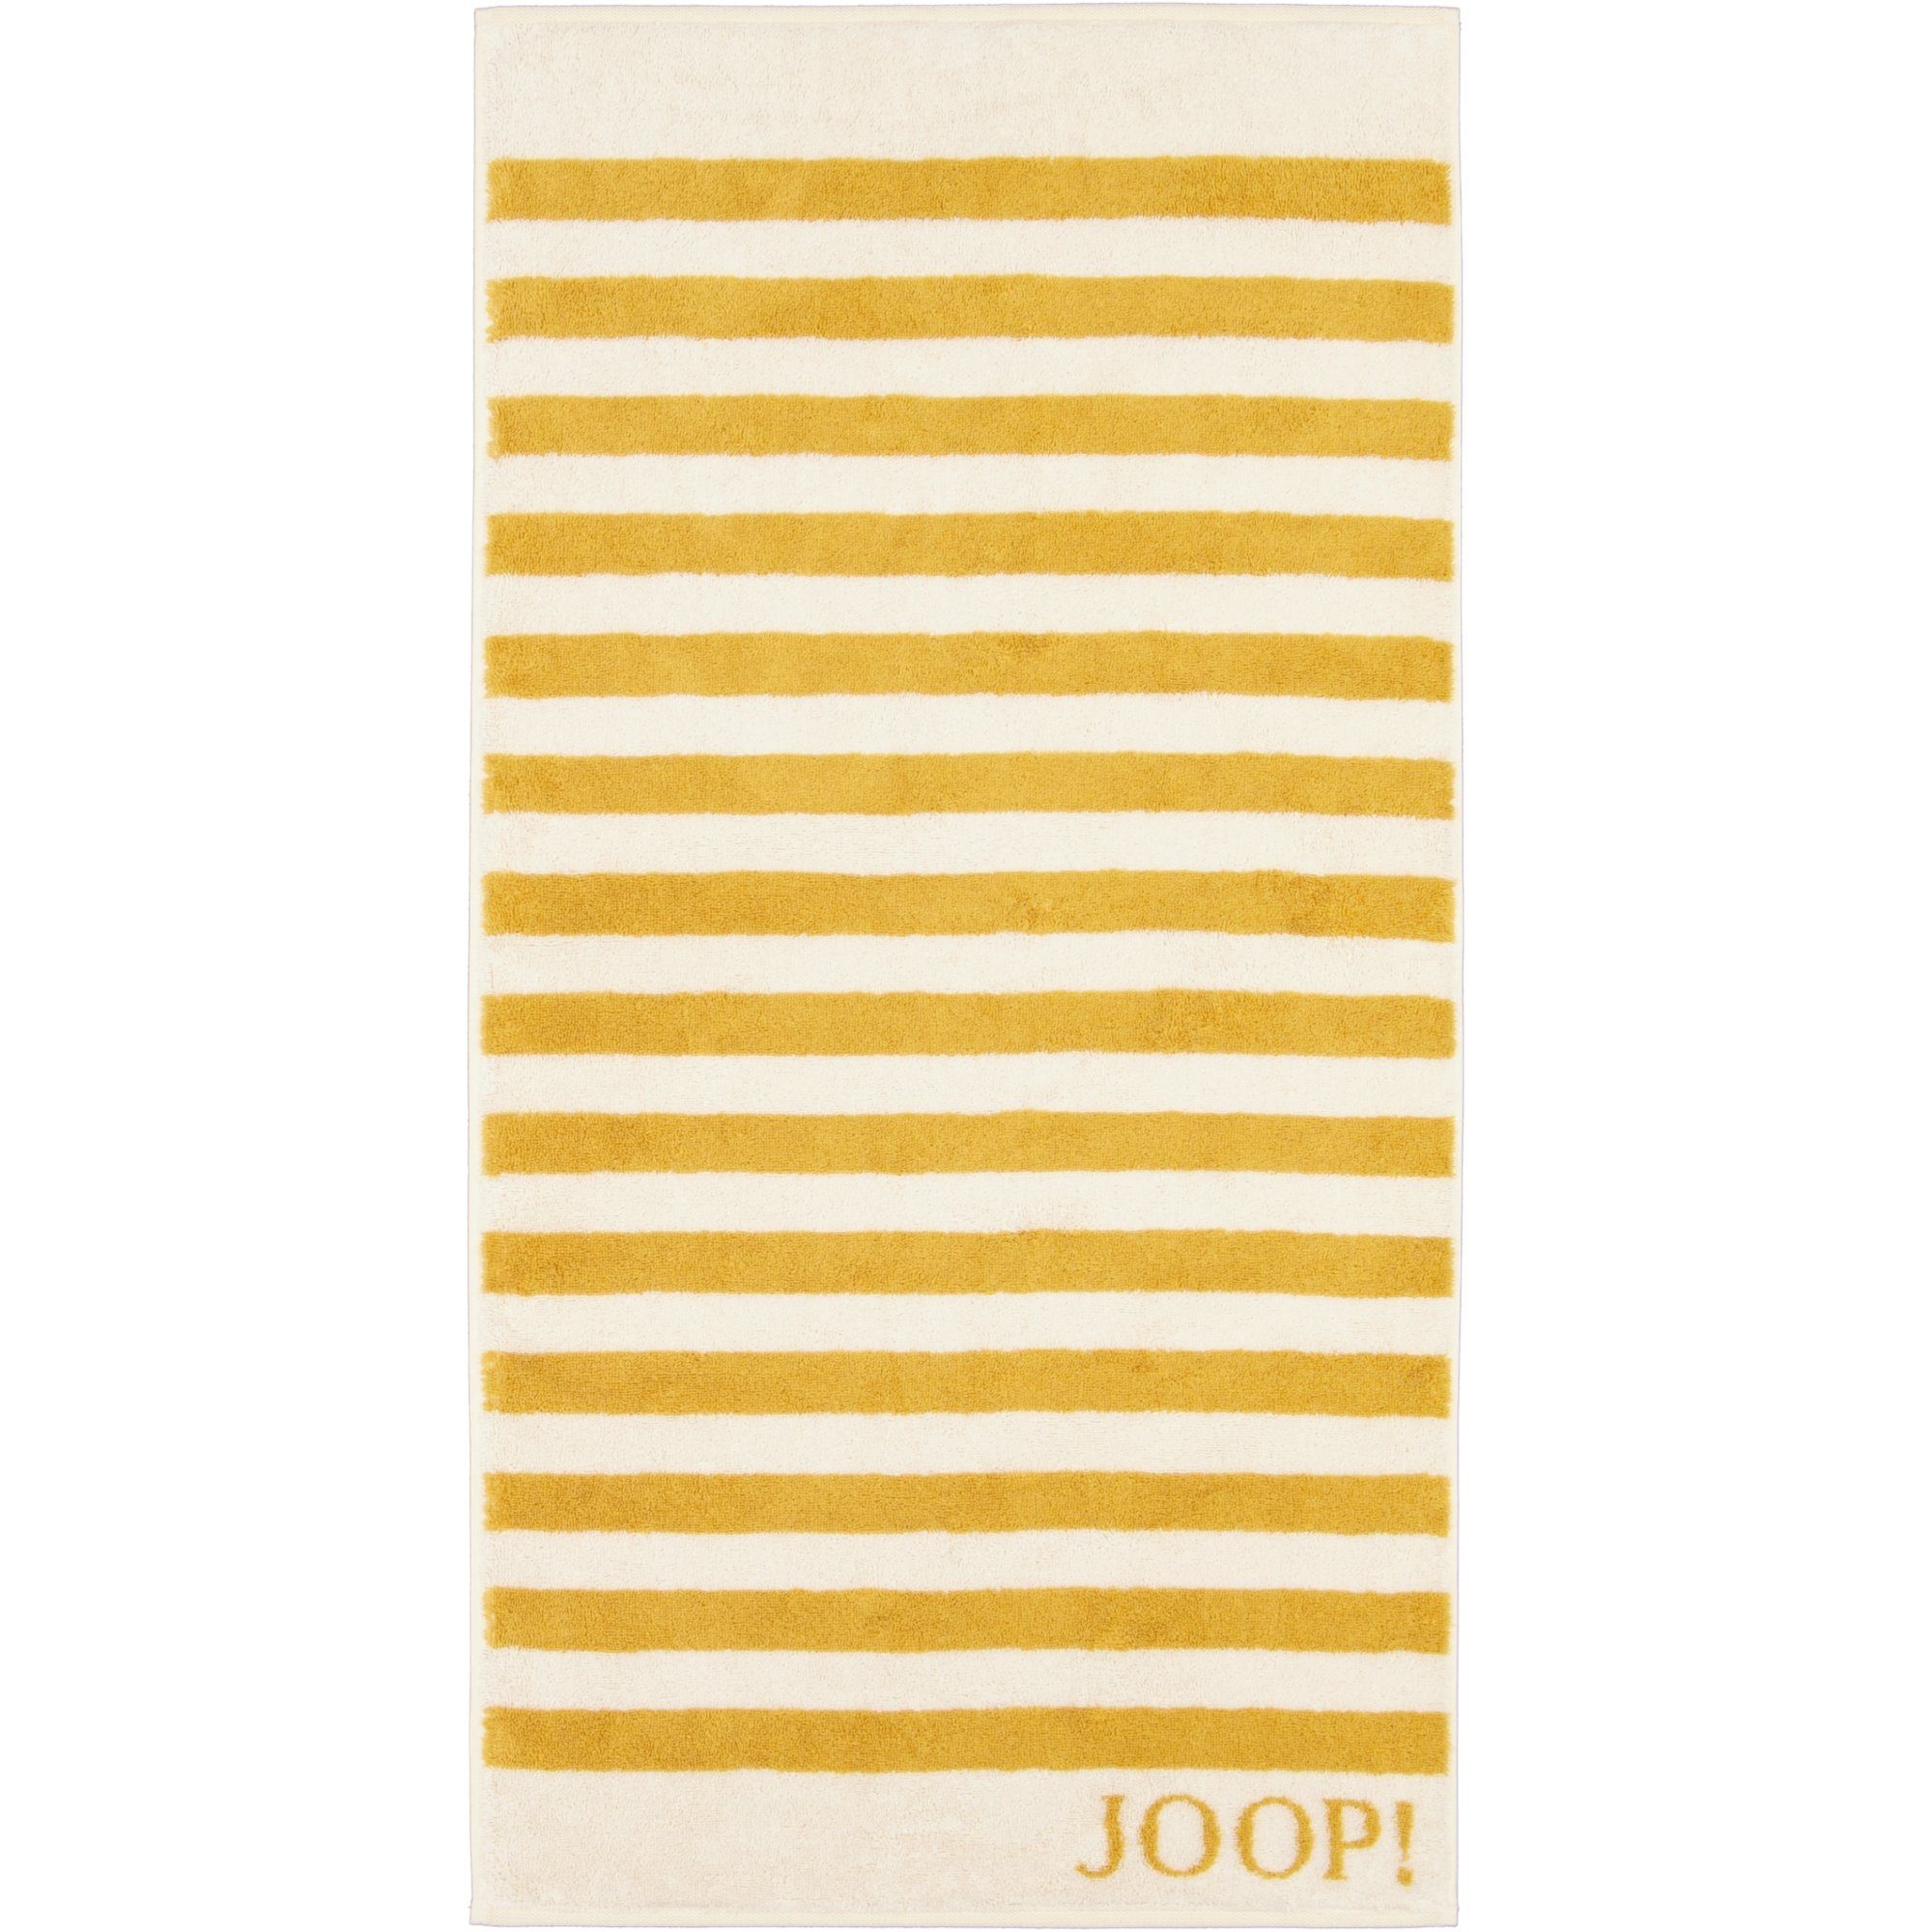 Baumwolle Joop! Stripes Classic Ocker 1610, 100% Handtücher